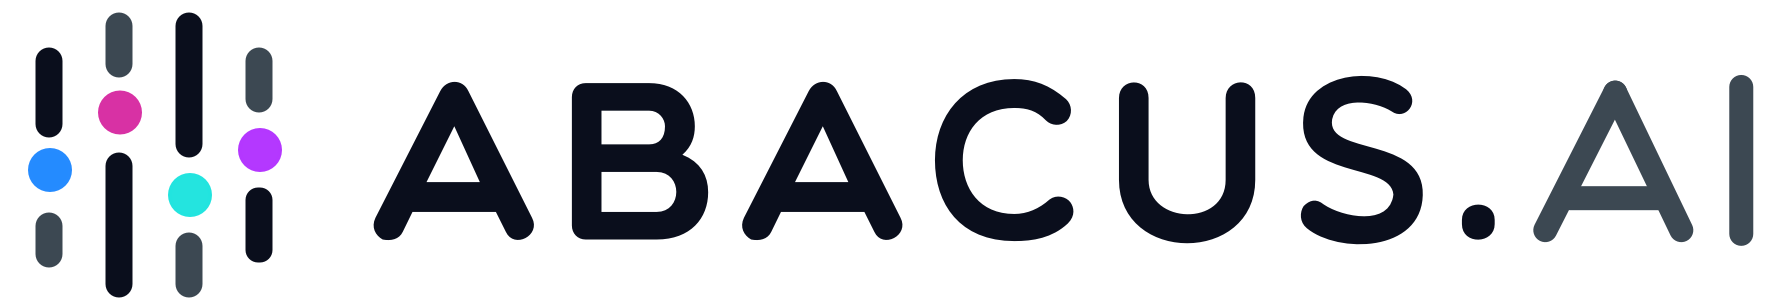 Logo de herramienta de inteligencia artificial Abacus A.I